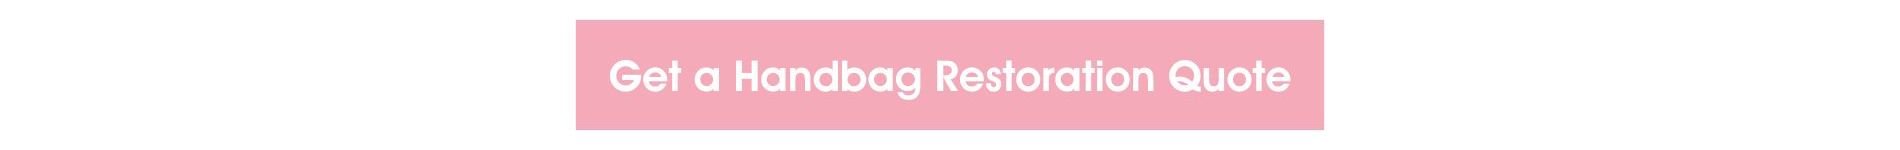 get your free handbag clinic restoration quote